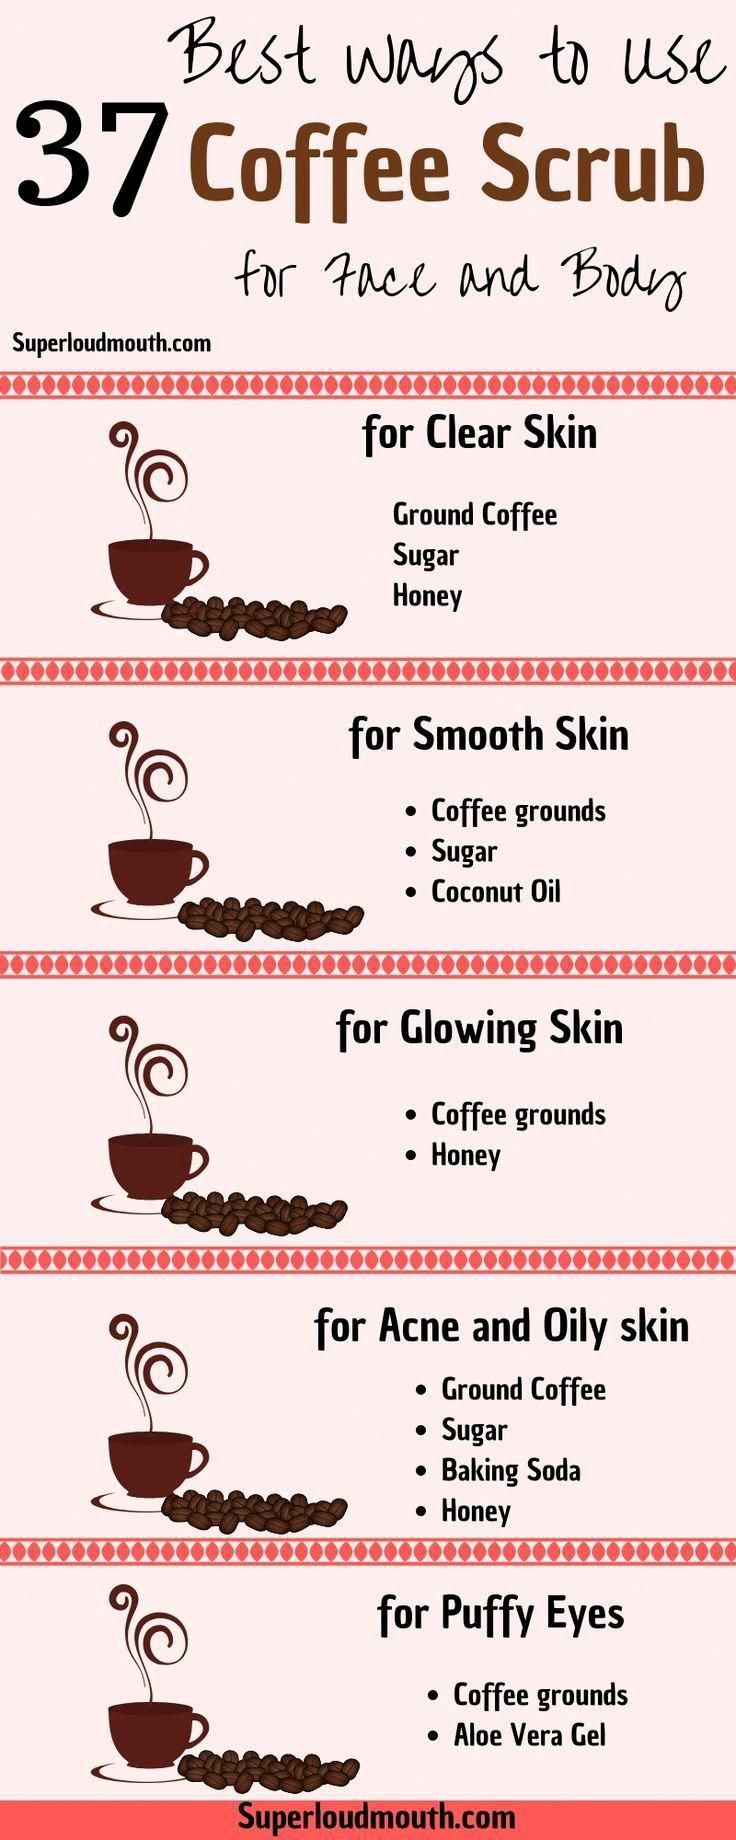 37 Diy Coffee Scrub Recipes for a Beautiful Face, Body and Cellulite -   18 skin care Face coffee scrub ideas